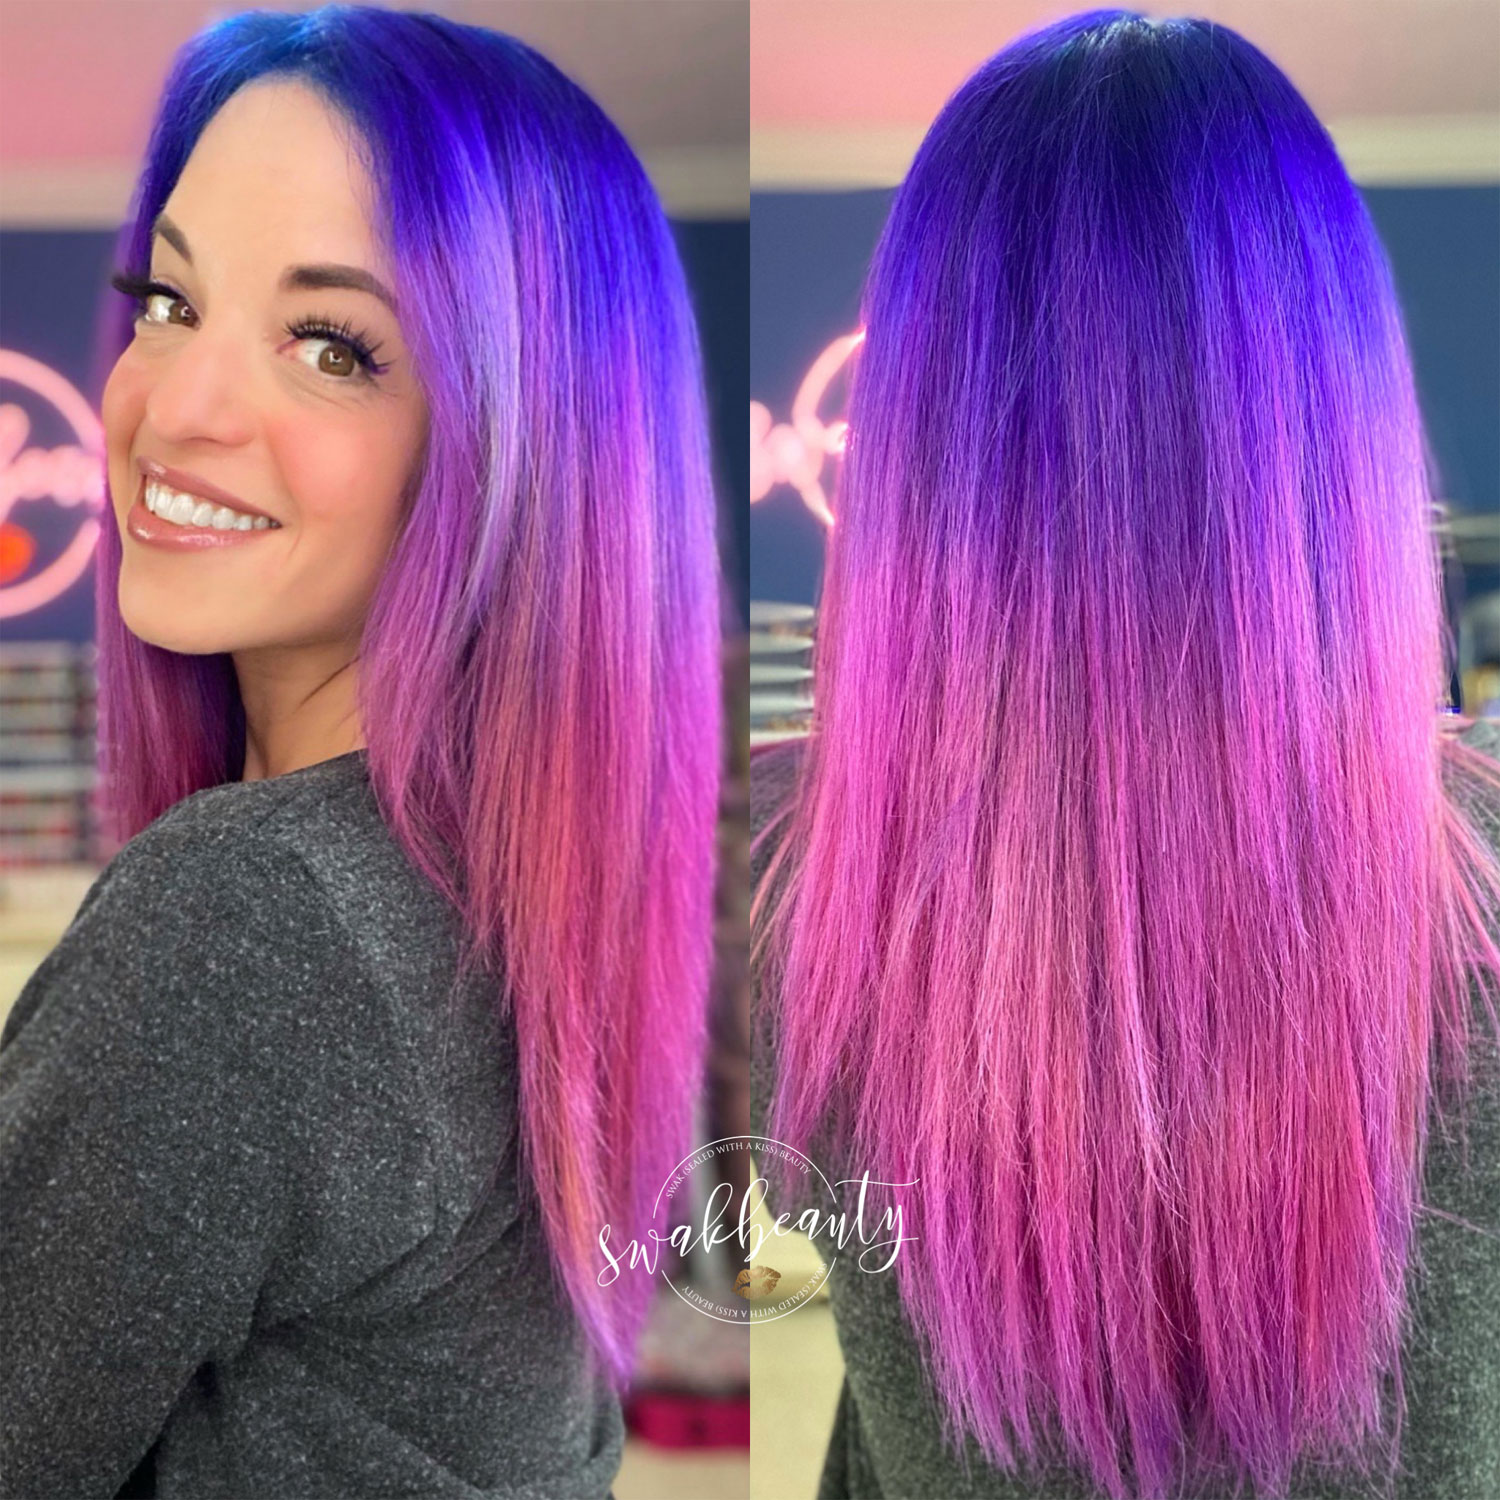 New Pink/Purple Ombré Hair! – swakbeauty.com